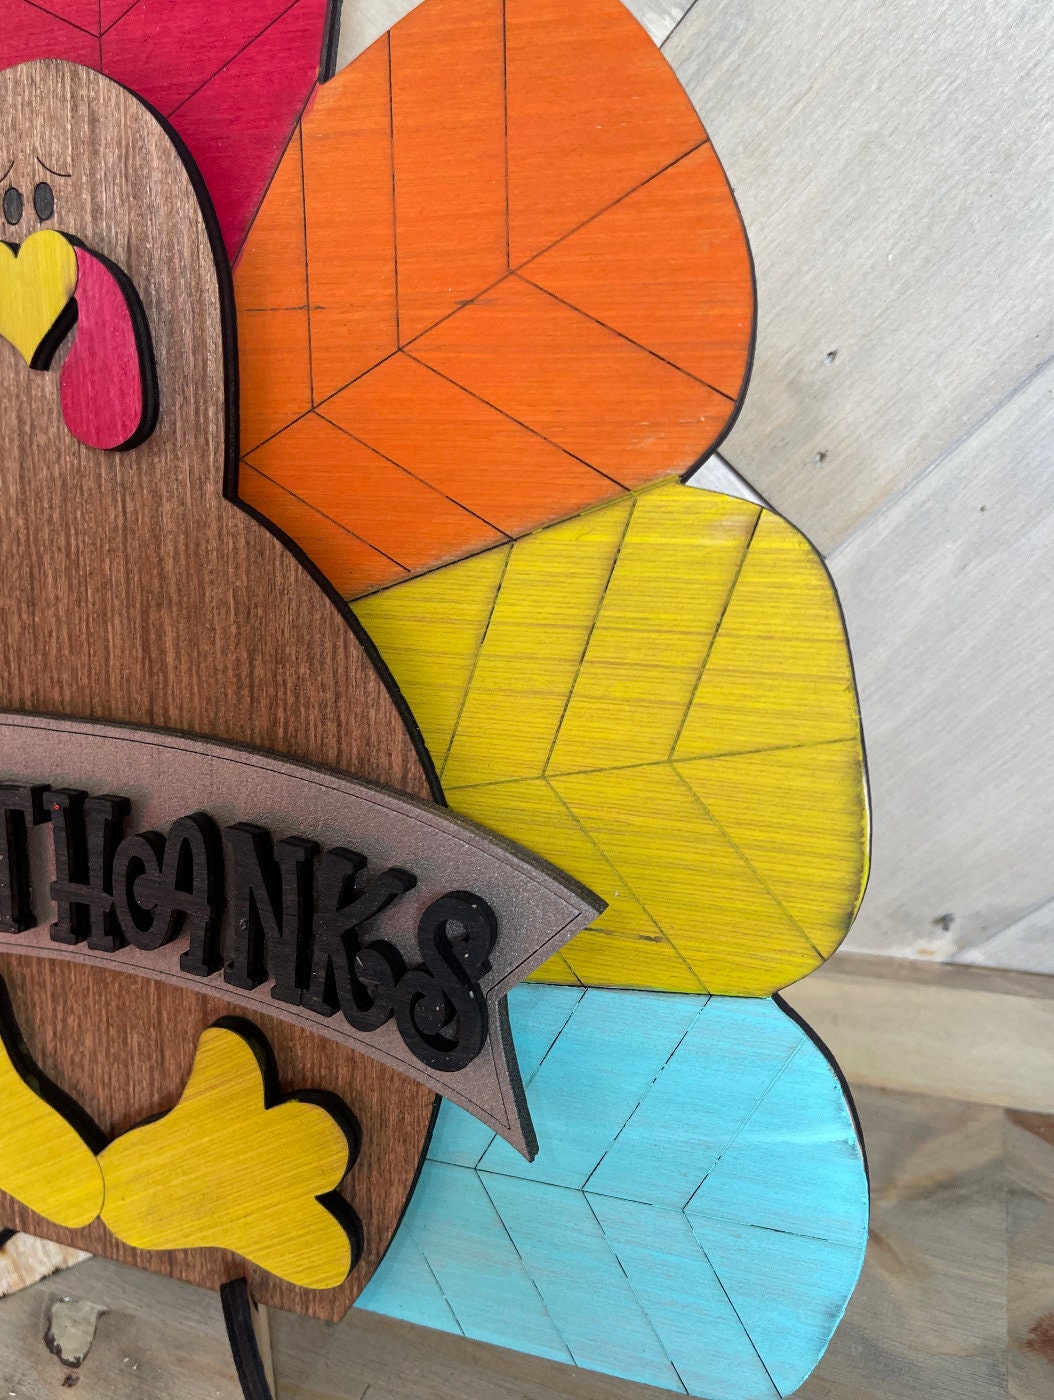 DIY Thanksgiving Turkey Paint Kit